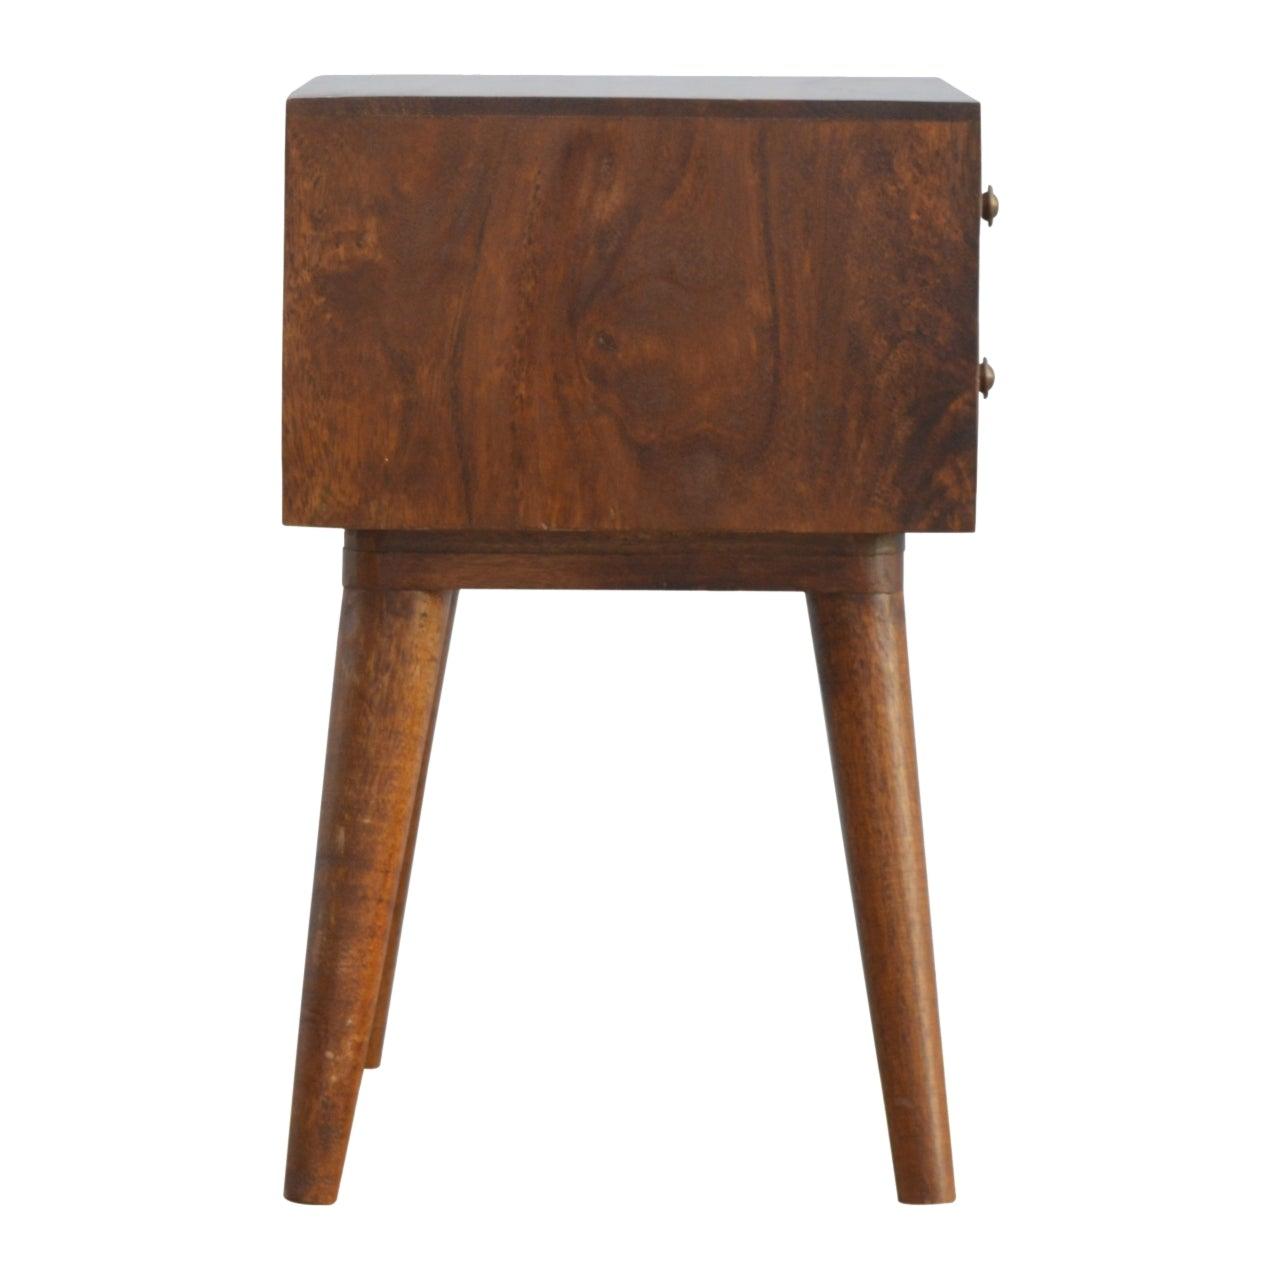 Geometric brass inlay 2 drawer bedside table - crimblefest furniture - image 7